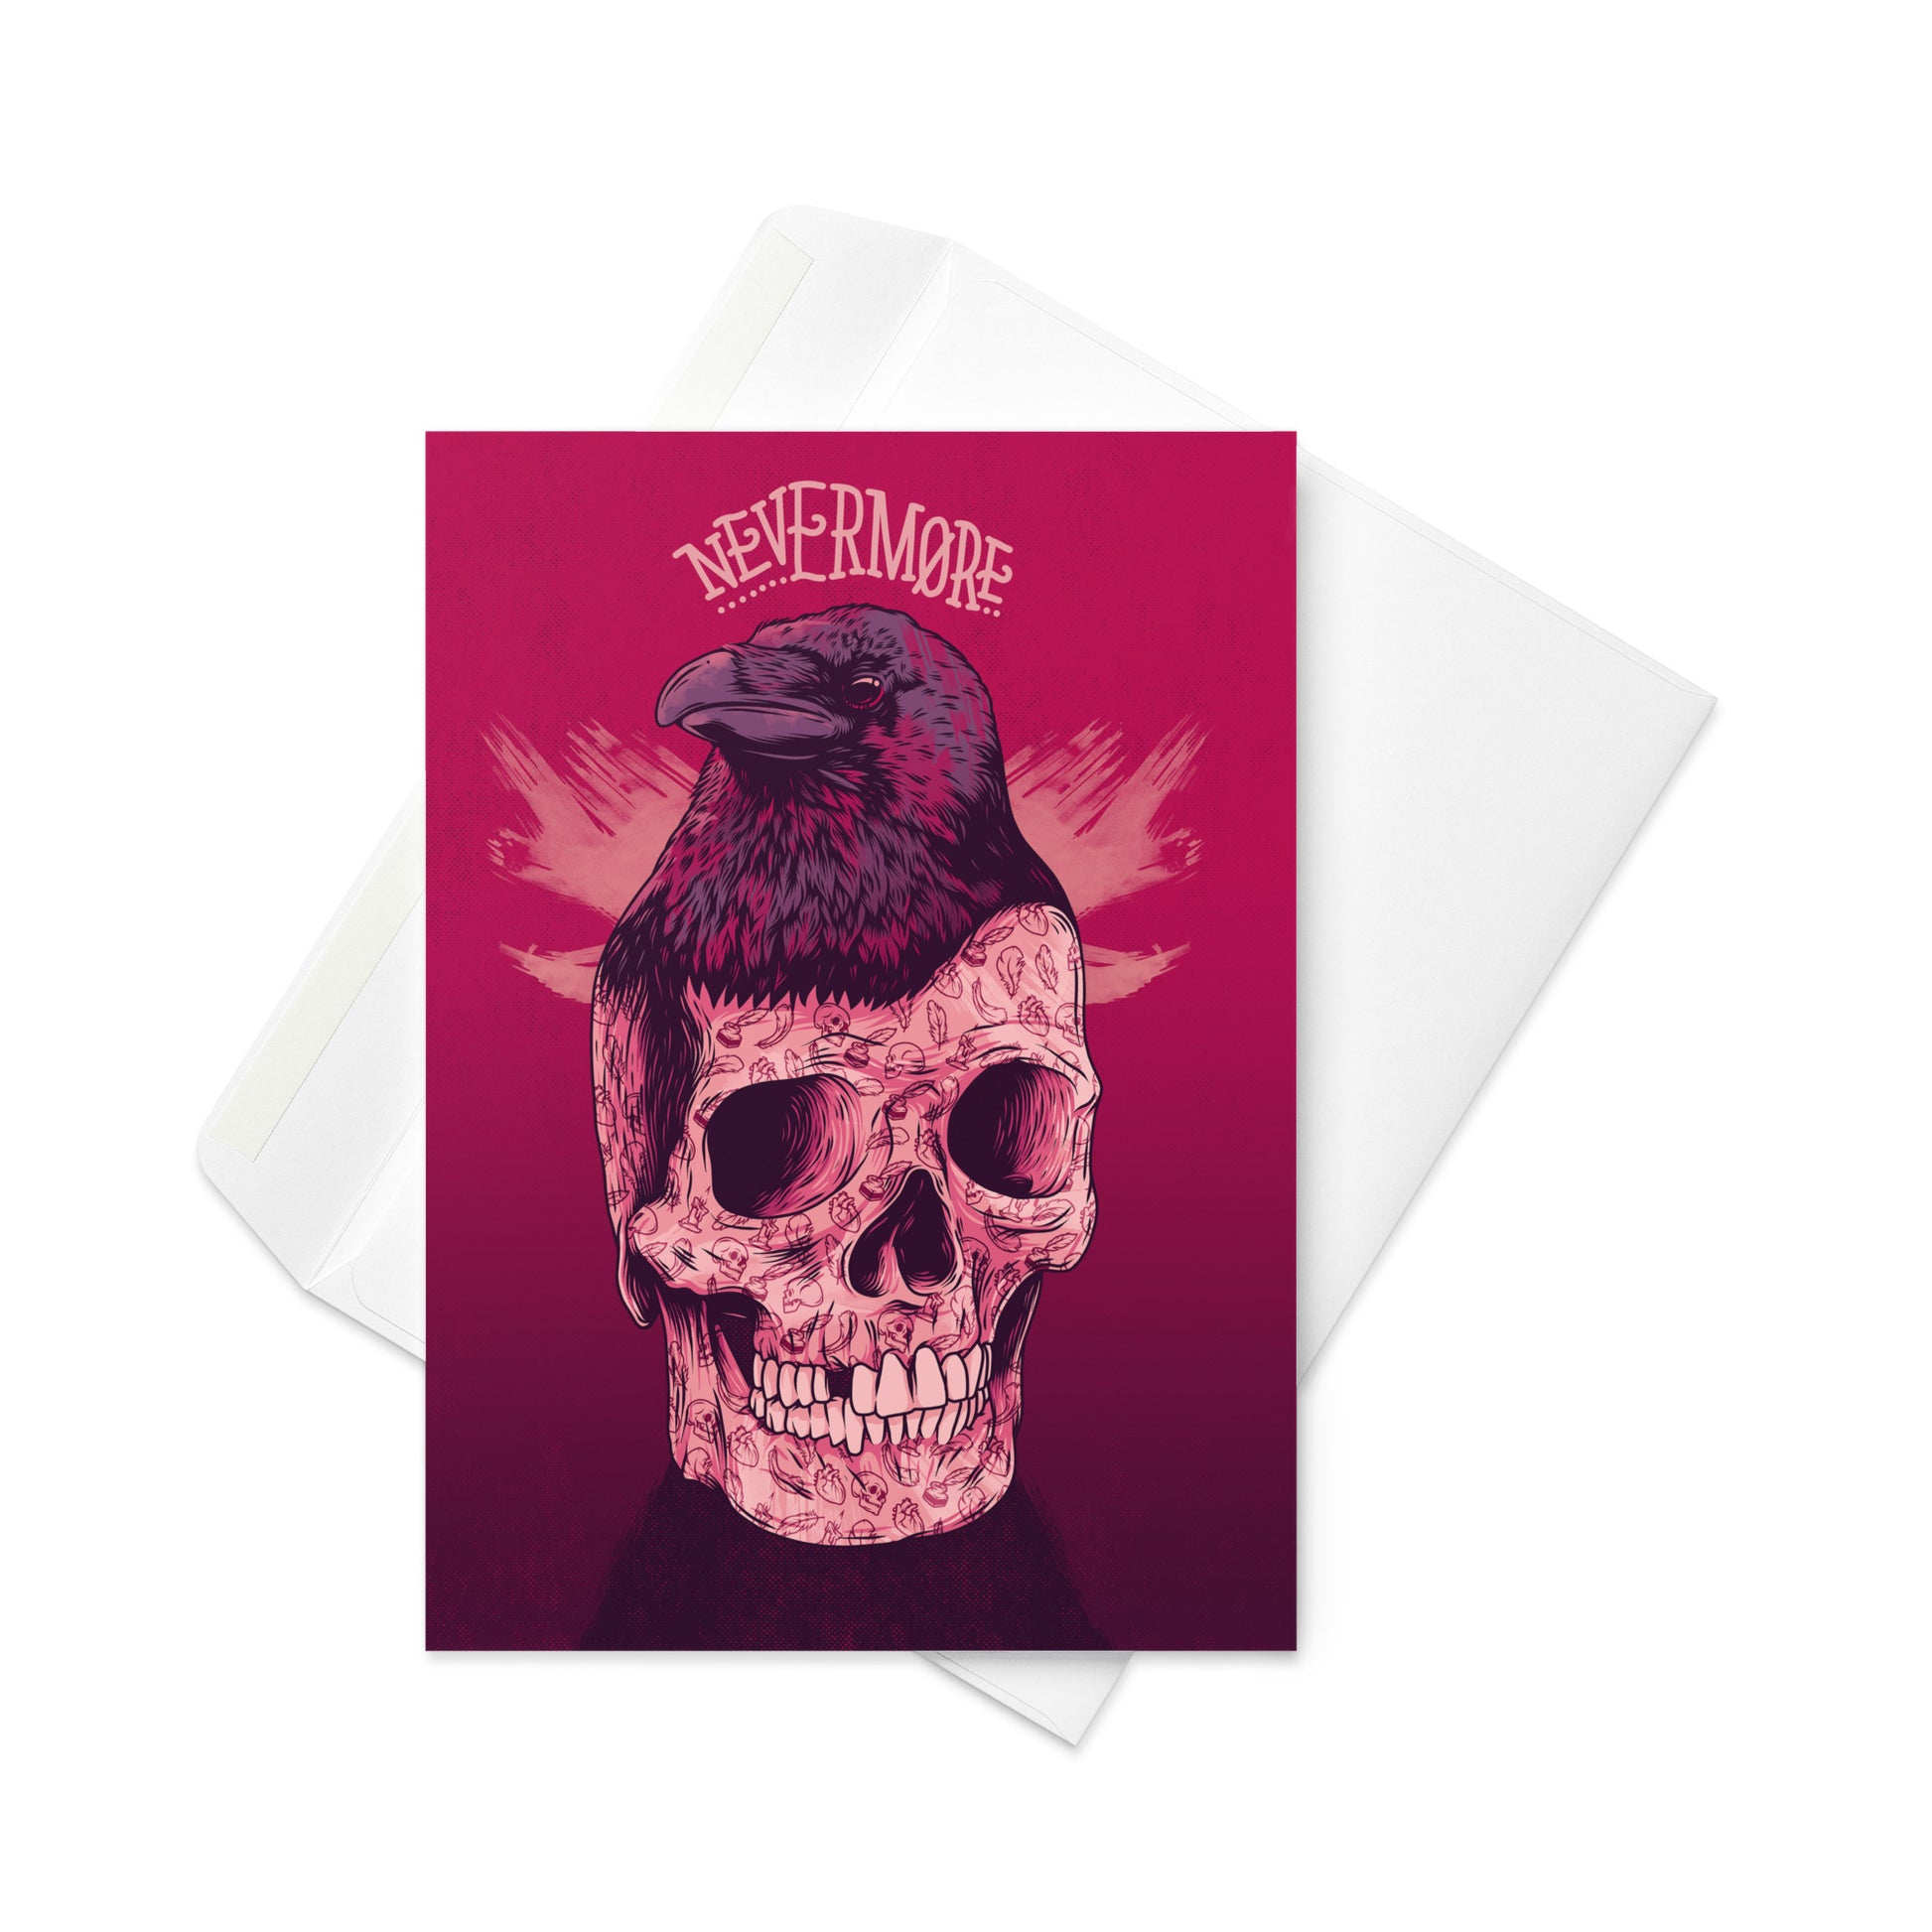 Edgar Allan Poe Skull & Raven Illustrated Greeting Card, featuring skull, raven, and Poe's portrait. 5x7